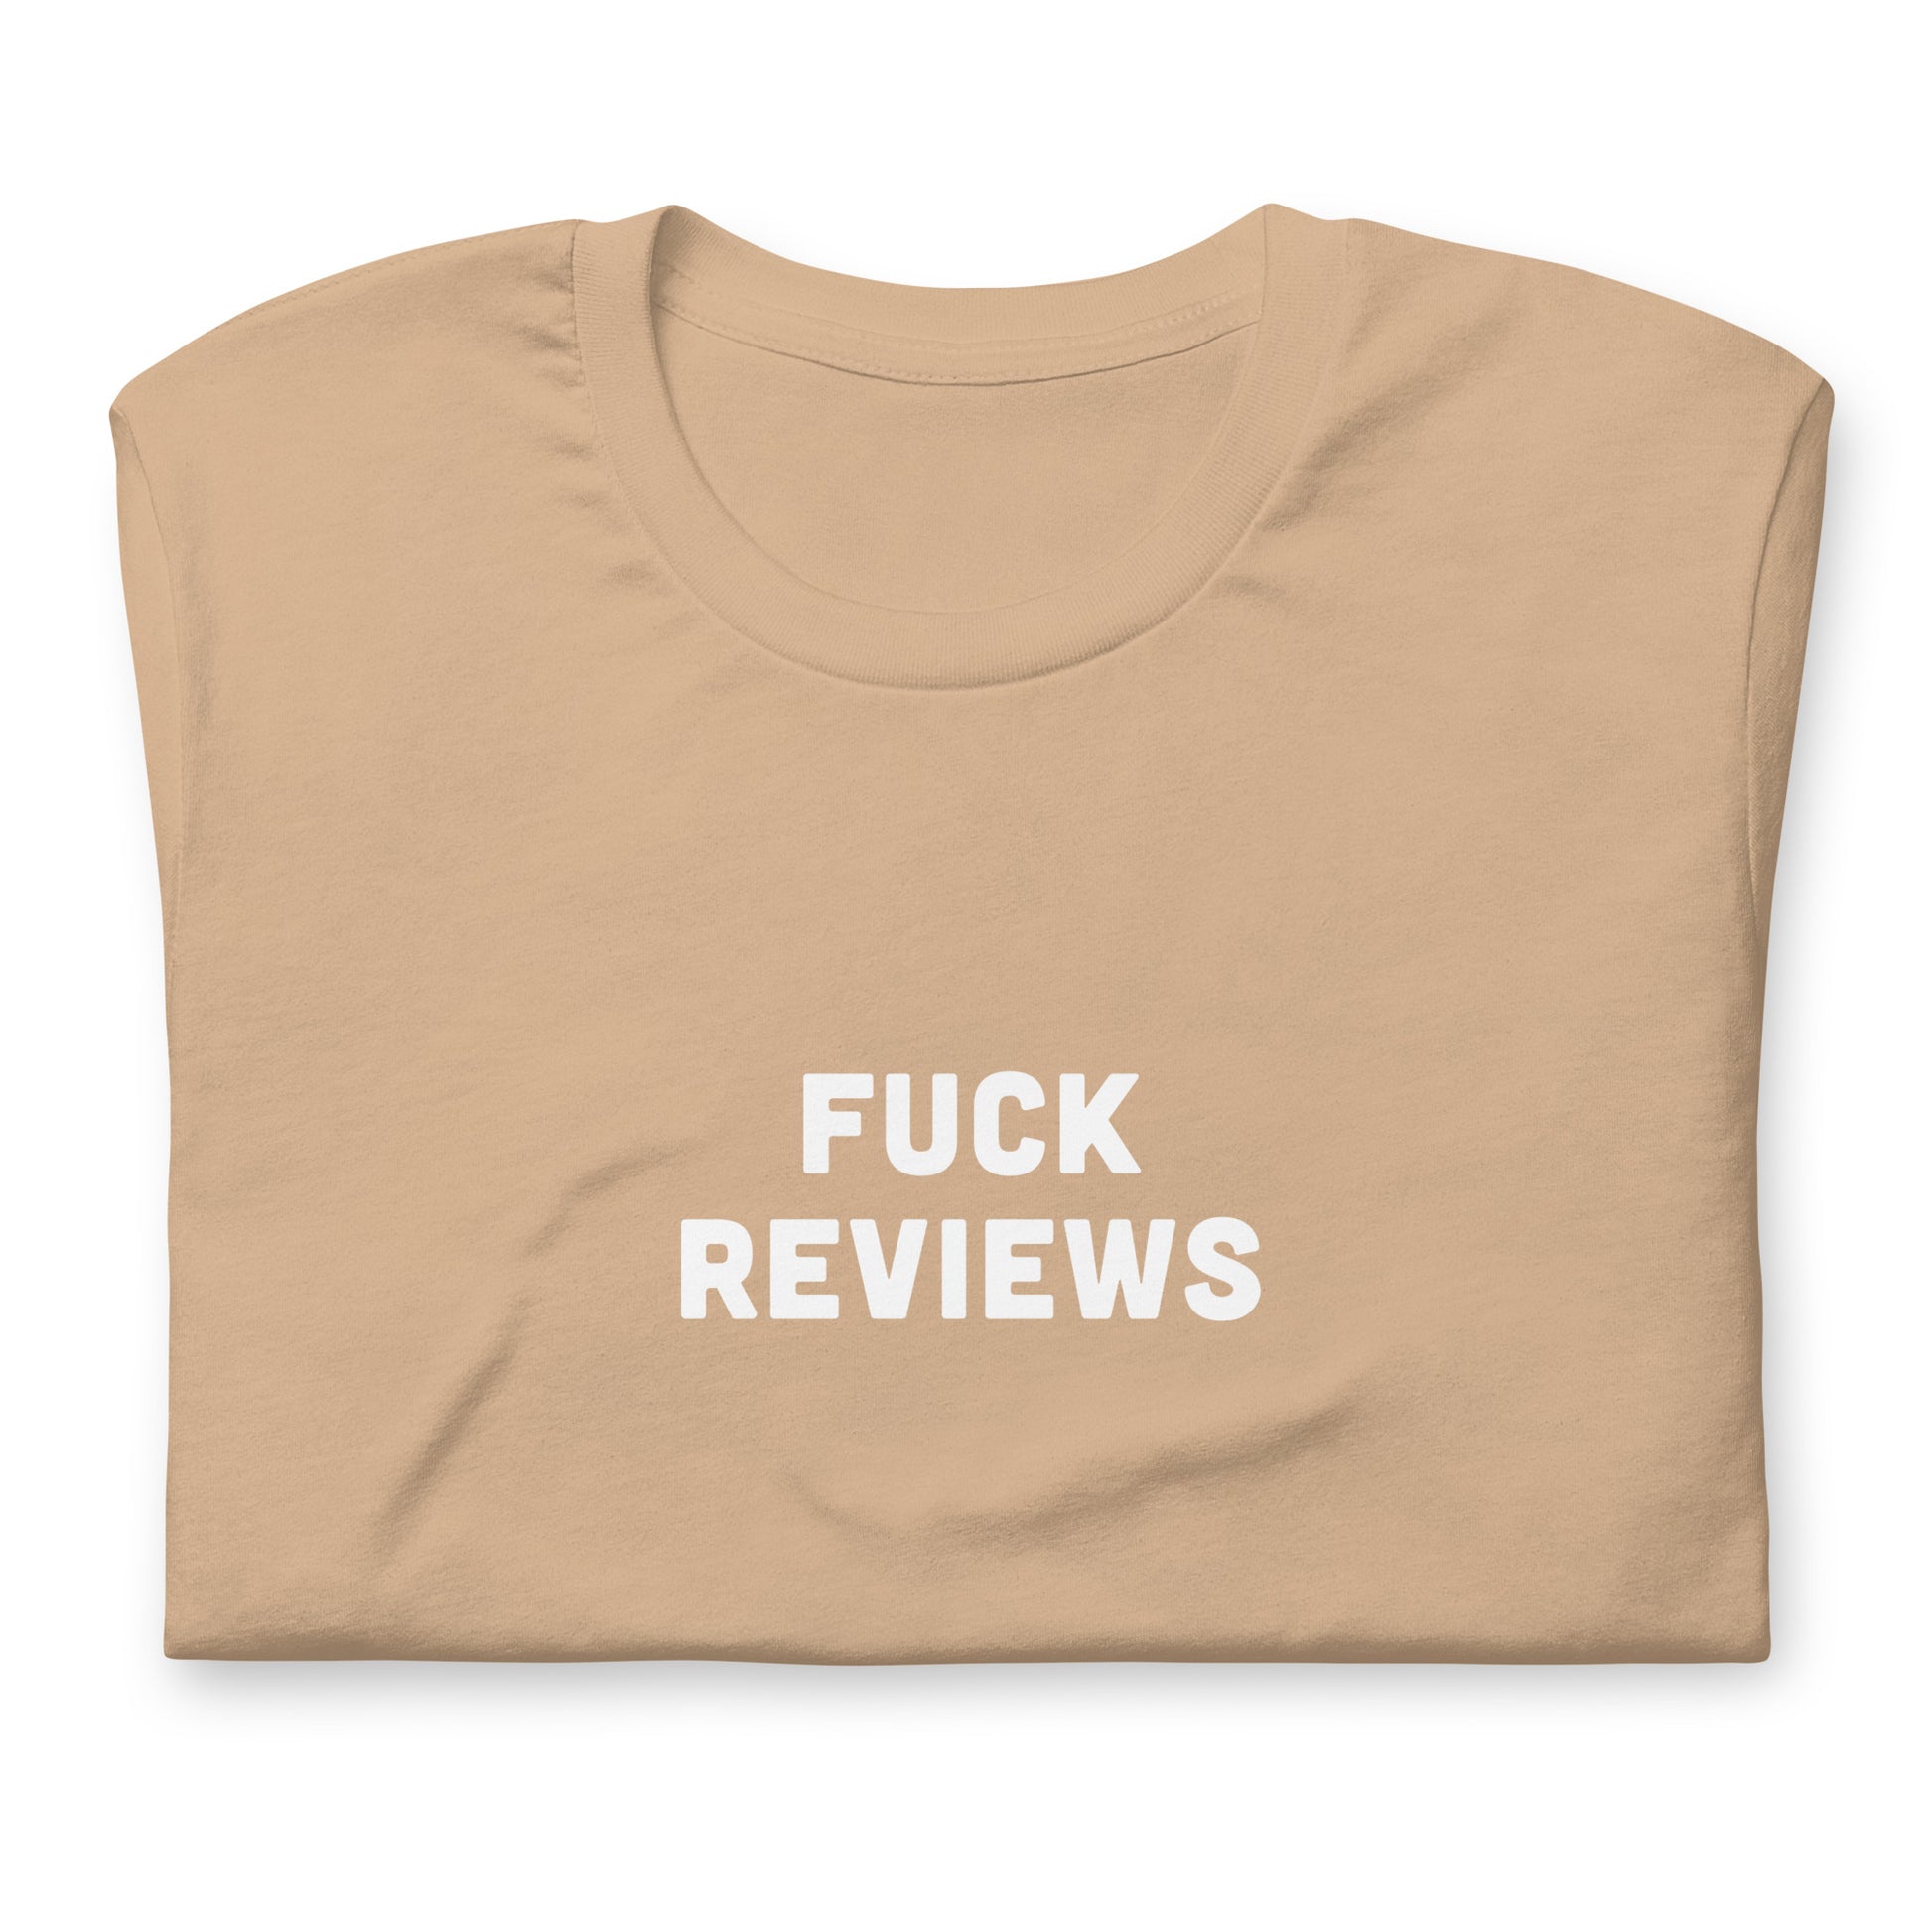 Fuck Reviews T-Shirt Size 2XL Color Forest